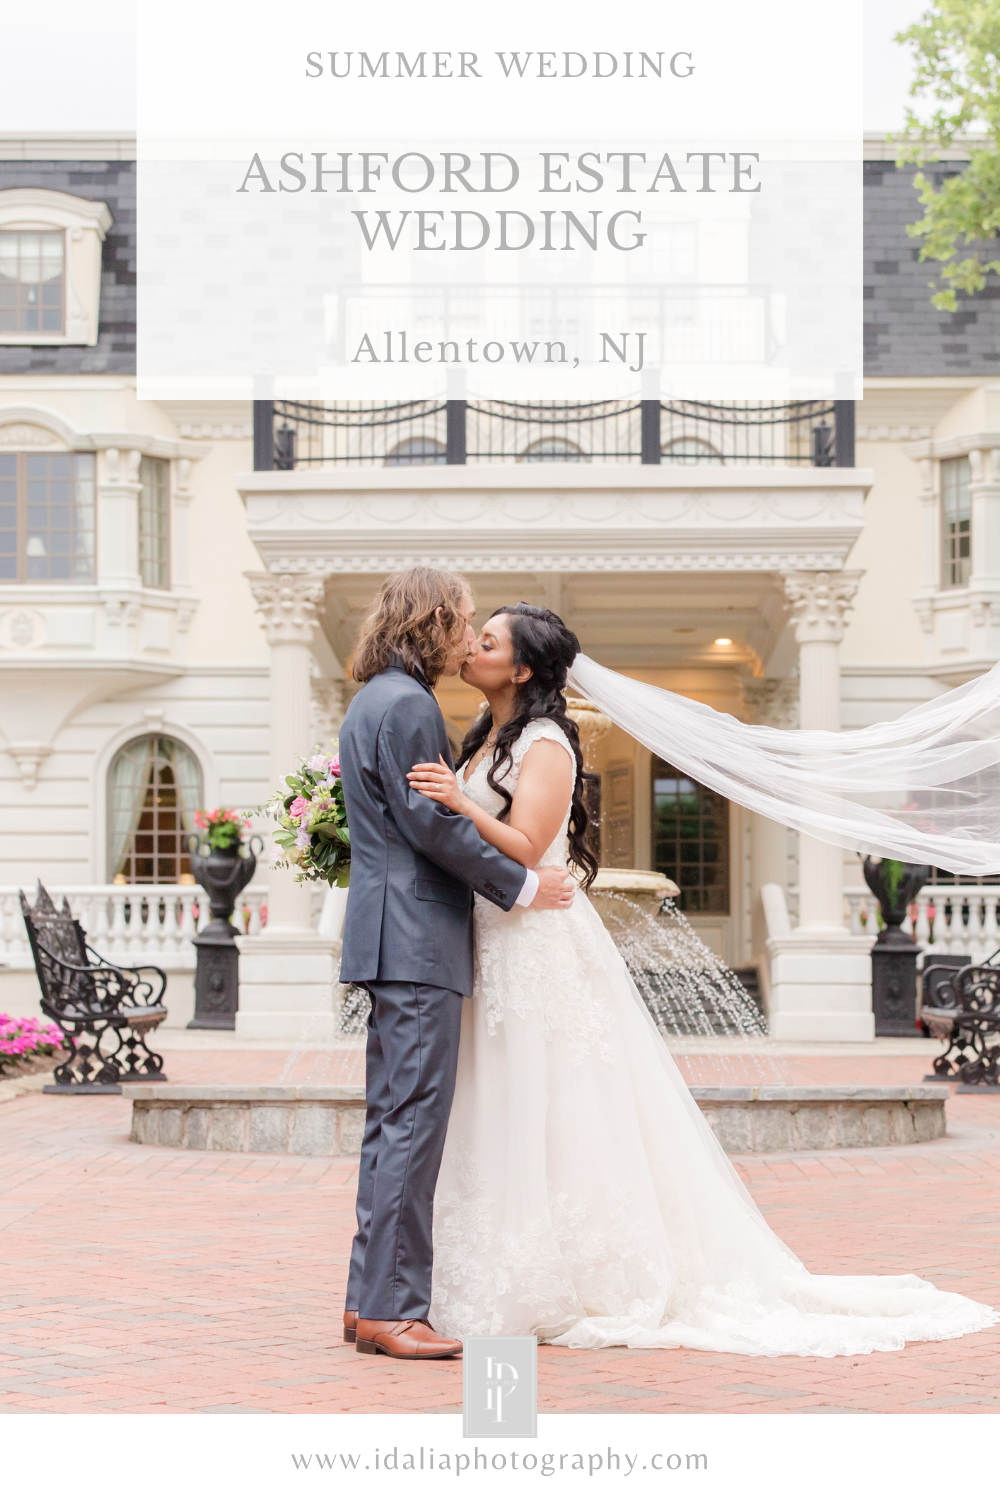 Ashford Estate wedding photographed by Idalia Photography